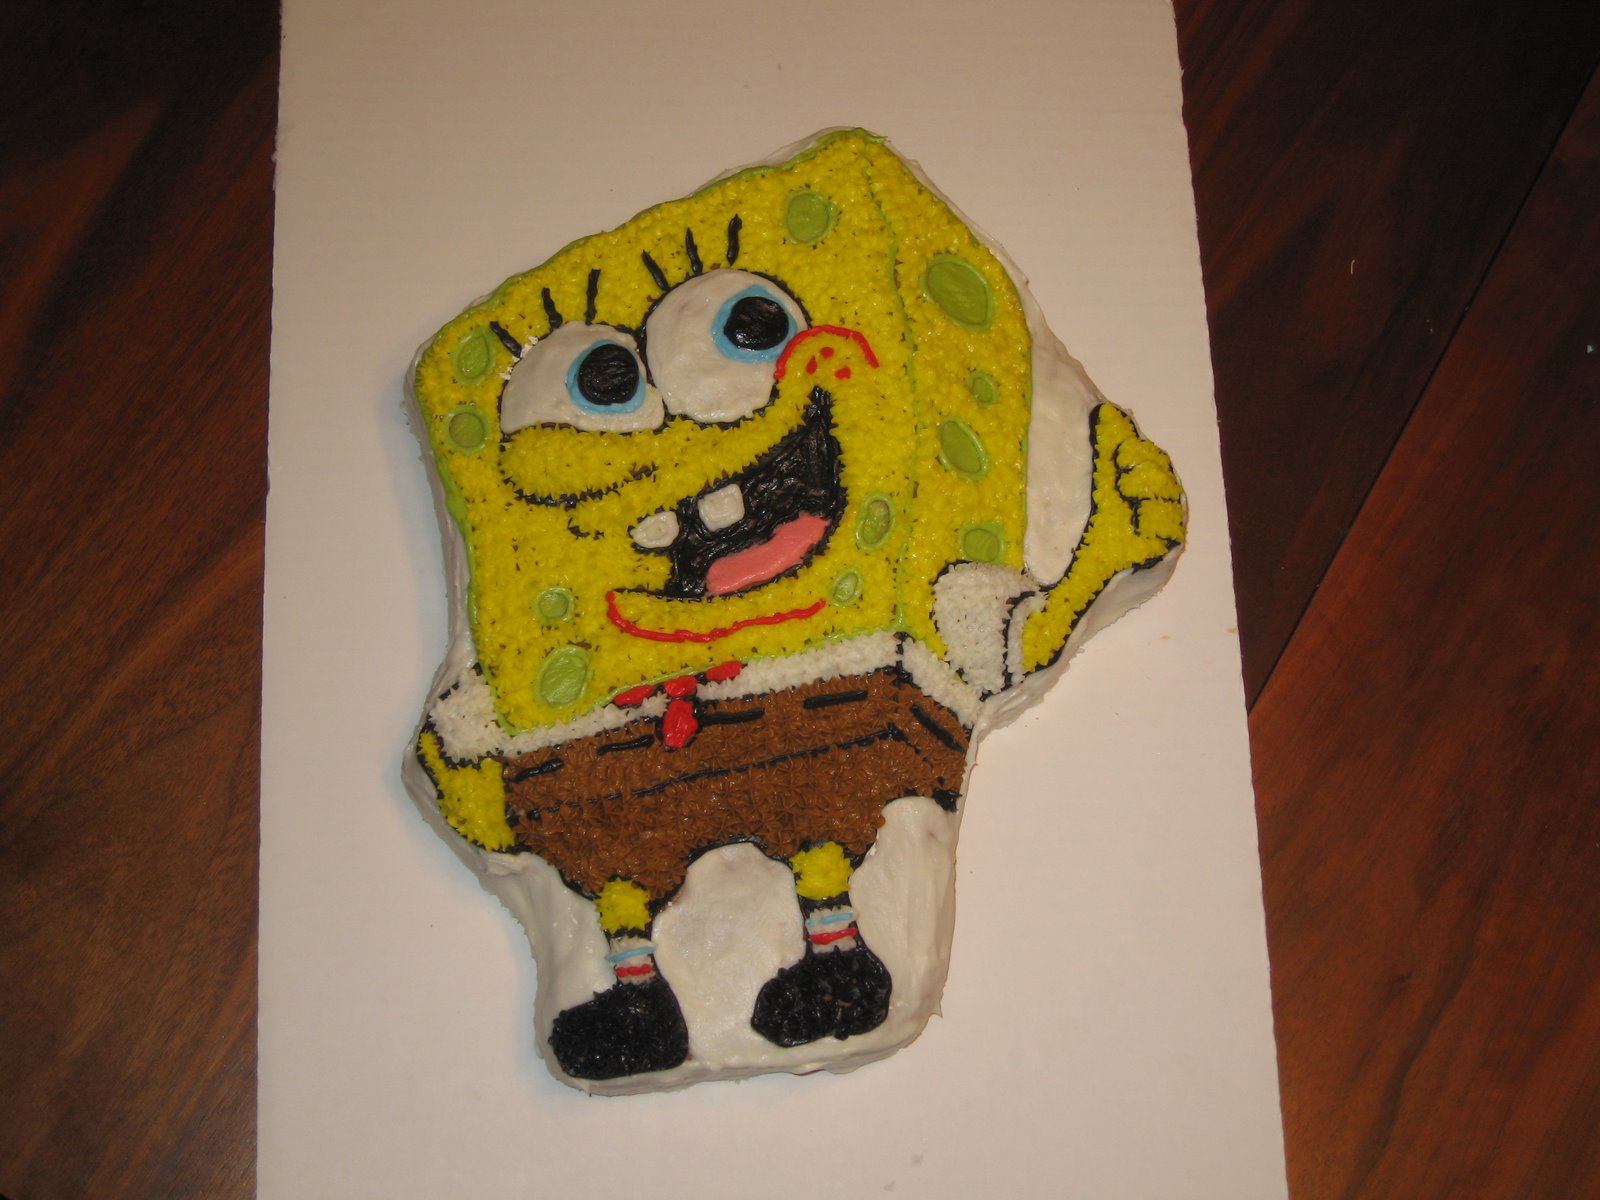 Spongebob+Cake.jpg.